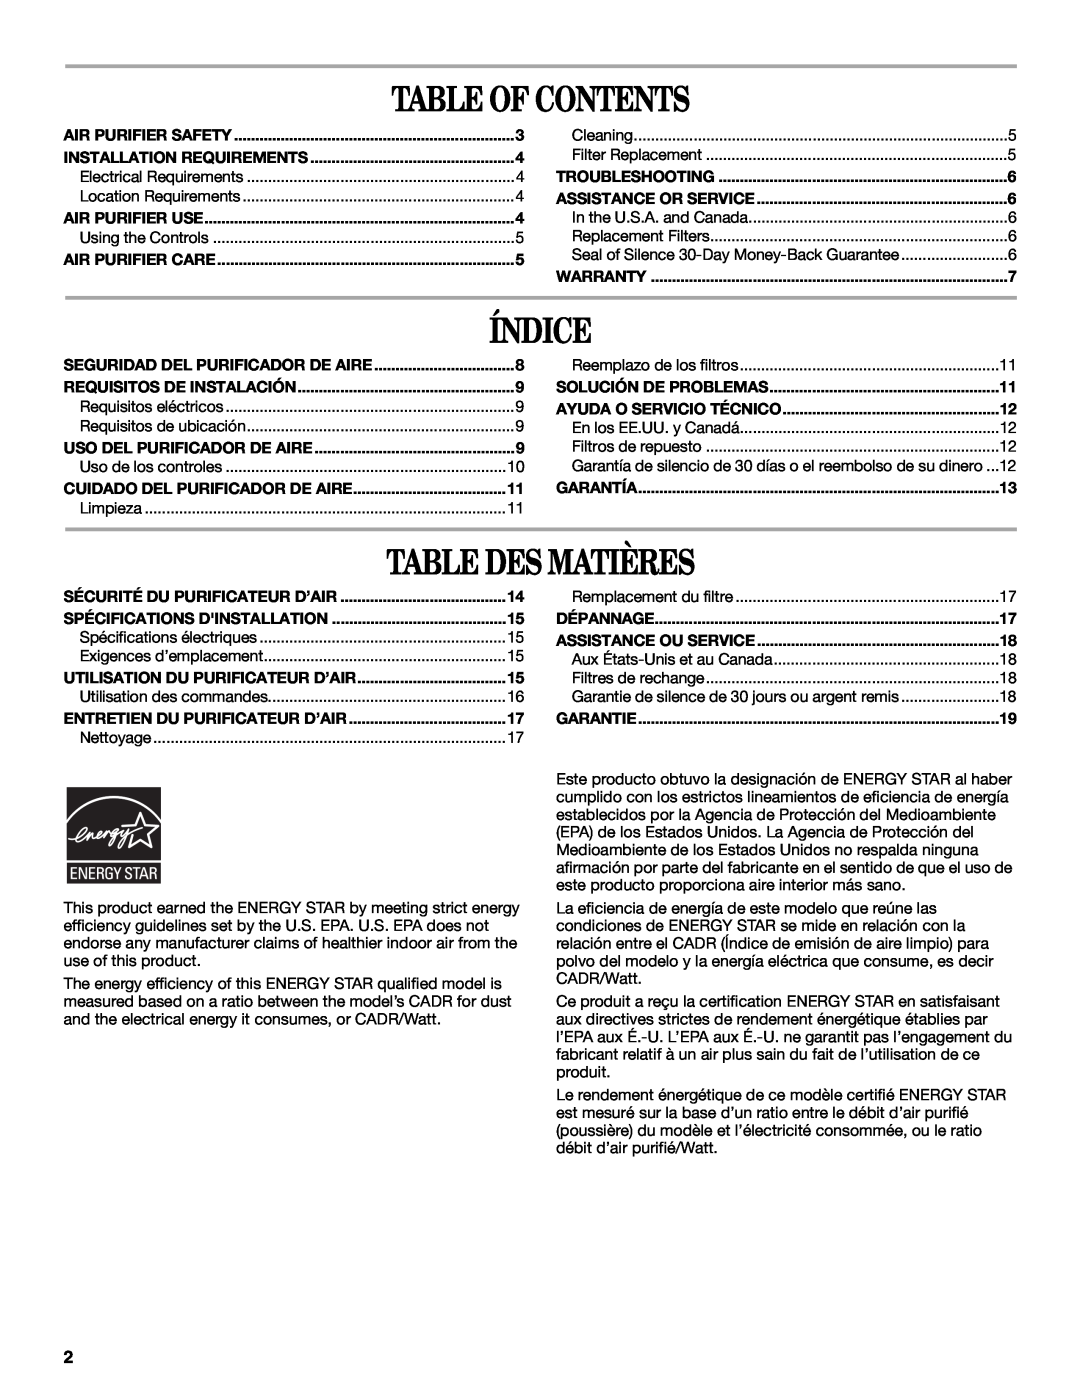 Maytag MT-AP510 manual Table Of Contents, Índice, Table Des Matières 